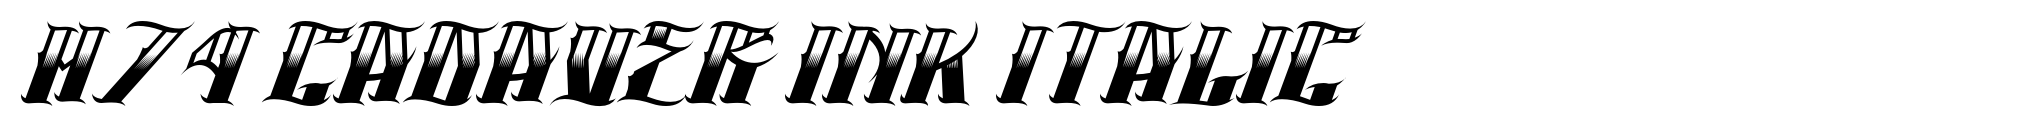 H74 Cadaver Ink Italic image